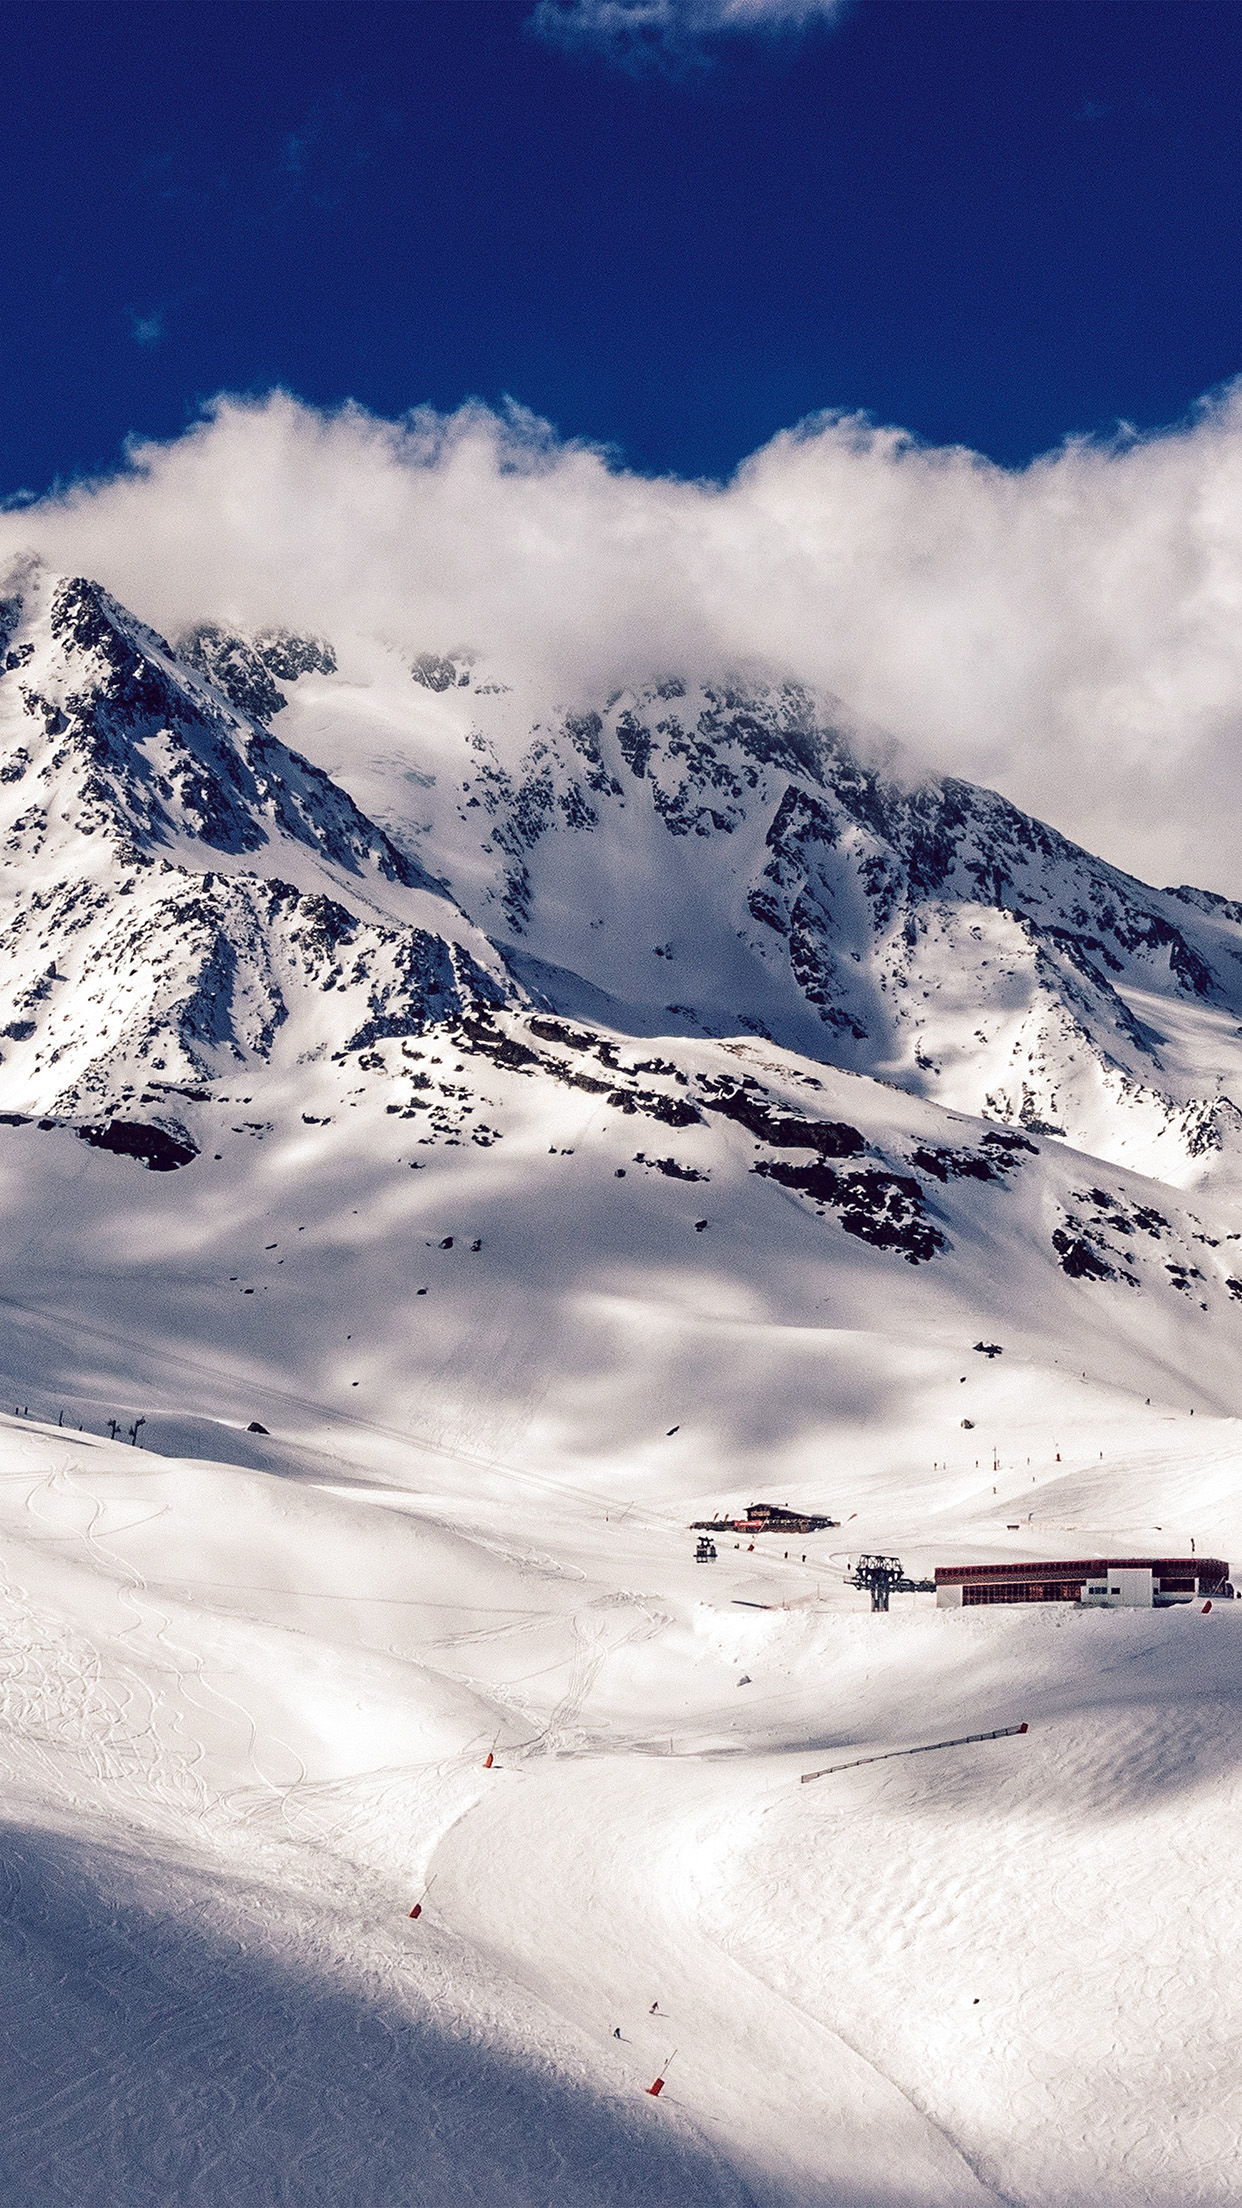 iPhone X wallpaper. snow mountain winter nature blue sky